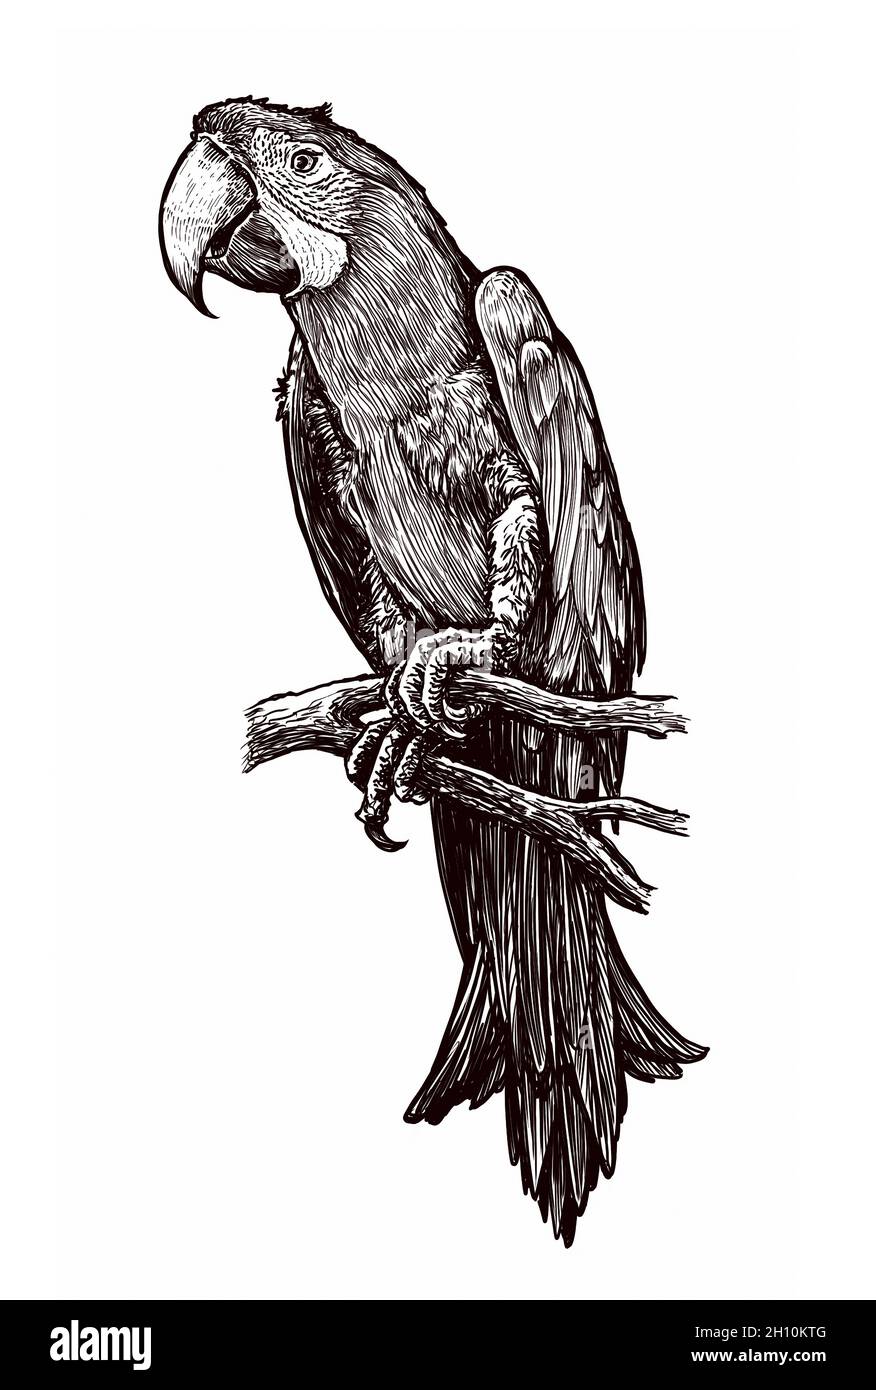 100,000 Parrot sketch Vector Images | Depositphotos-gemektower.com.vn